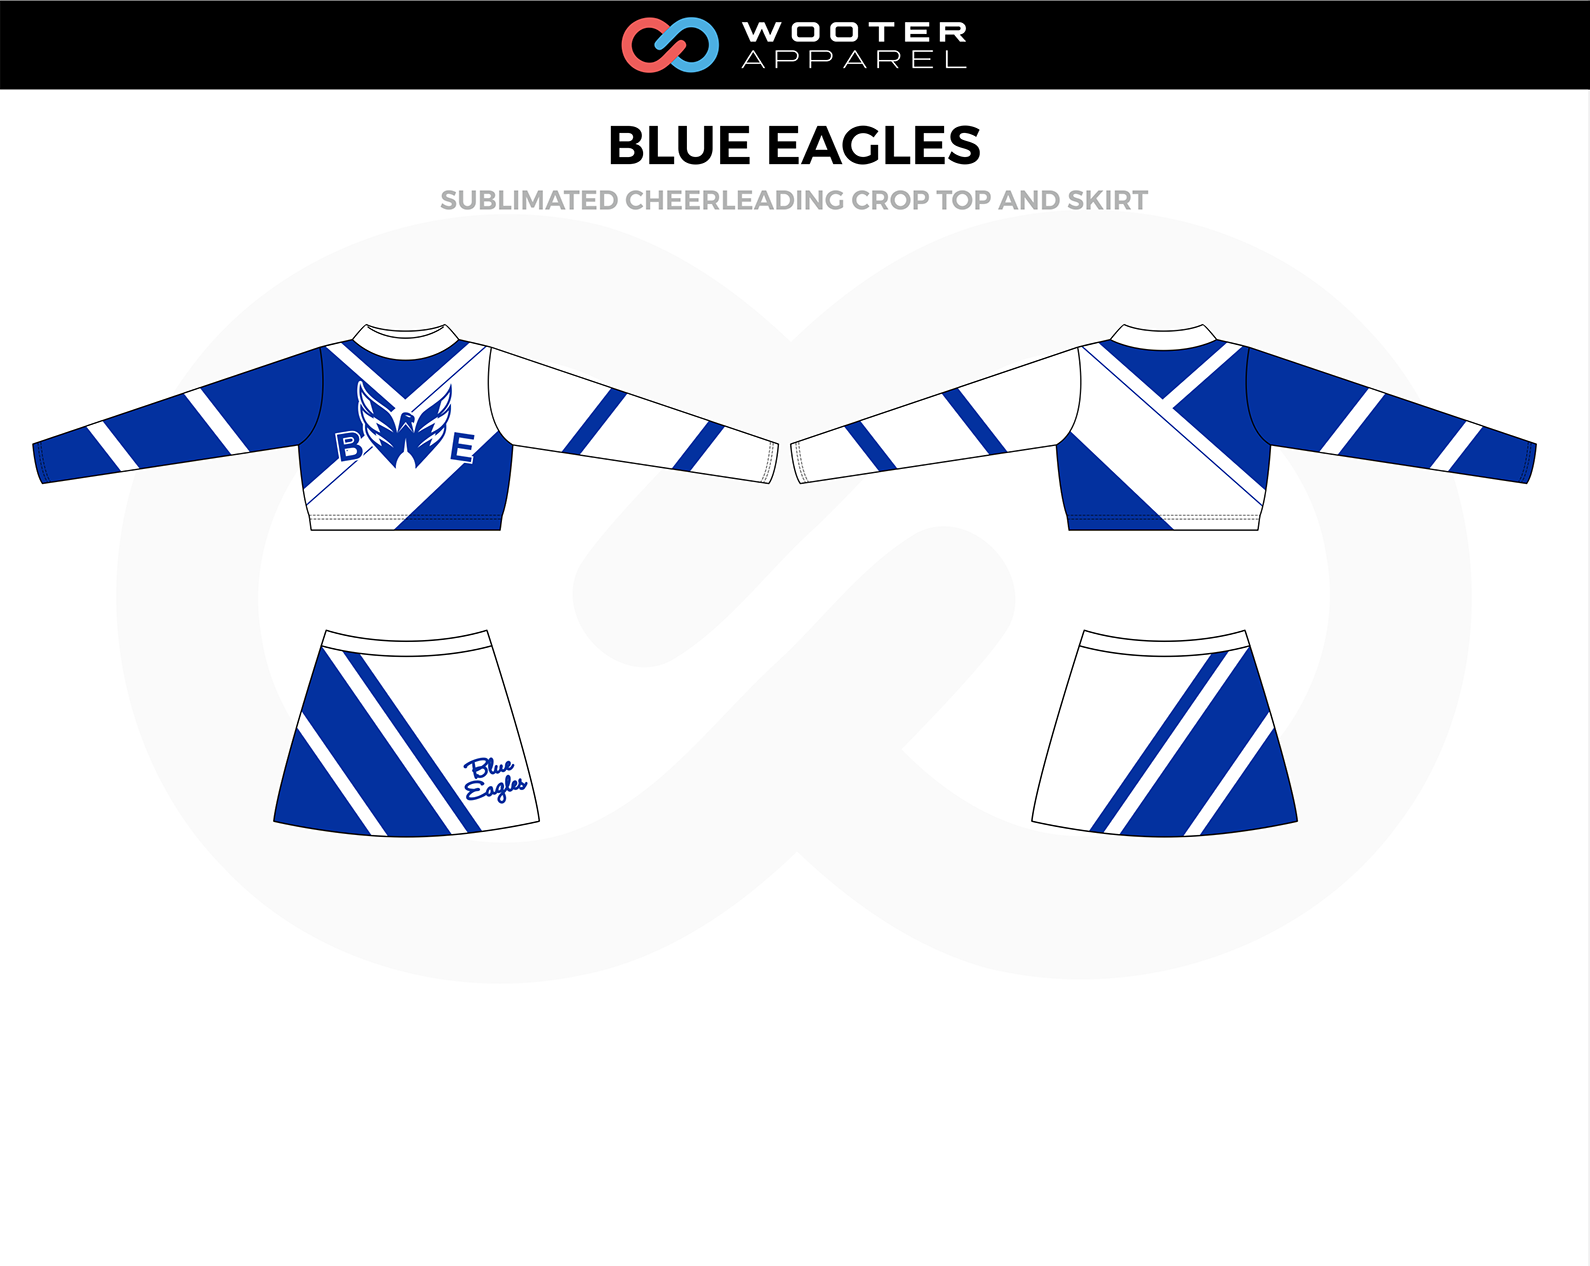 Blue Eagles Custom Cheer Uniforms, 4th view	